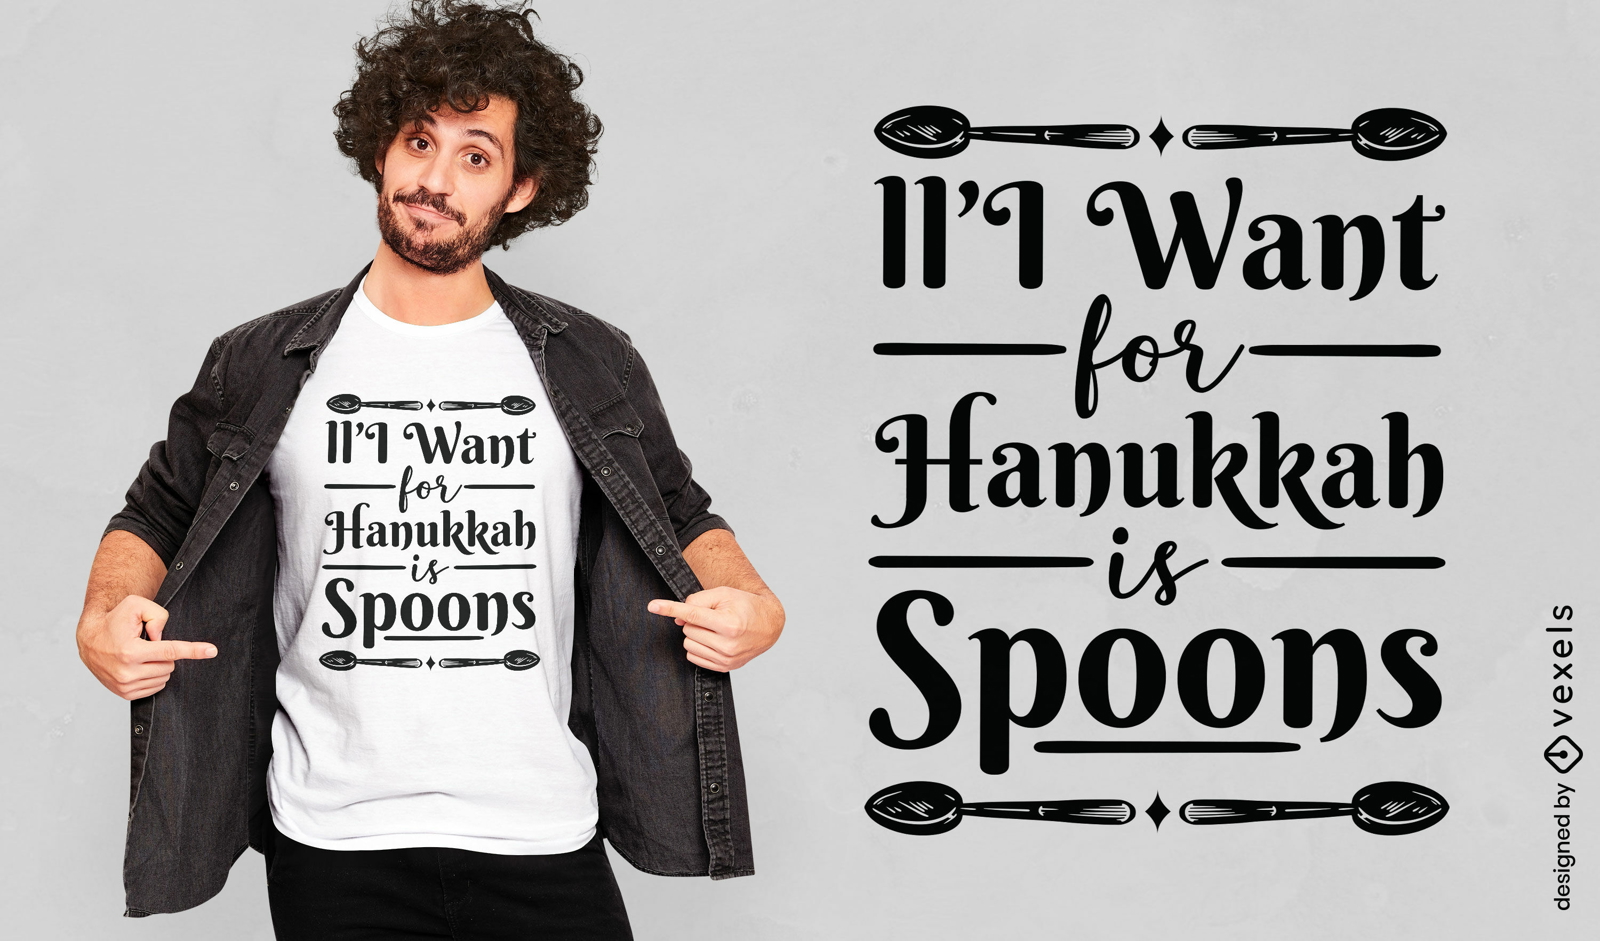 Spoons for Hanukkah t-shirt design